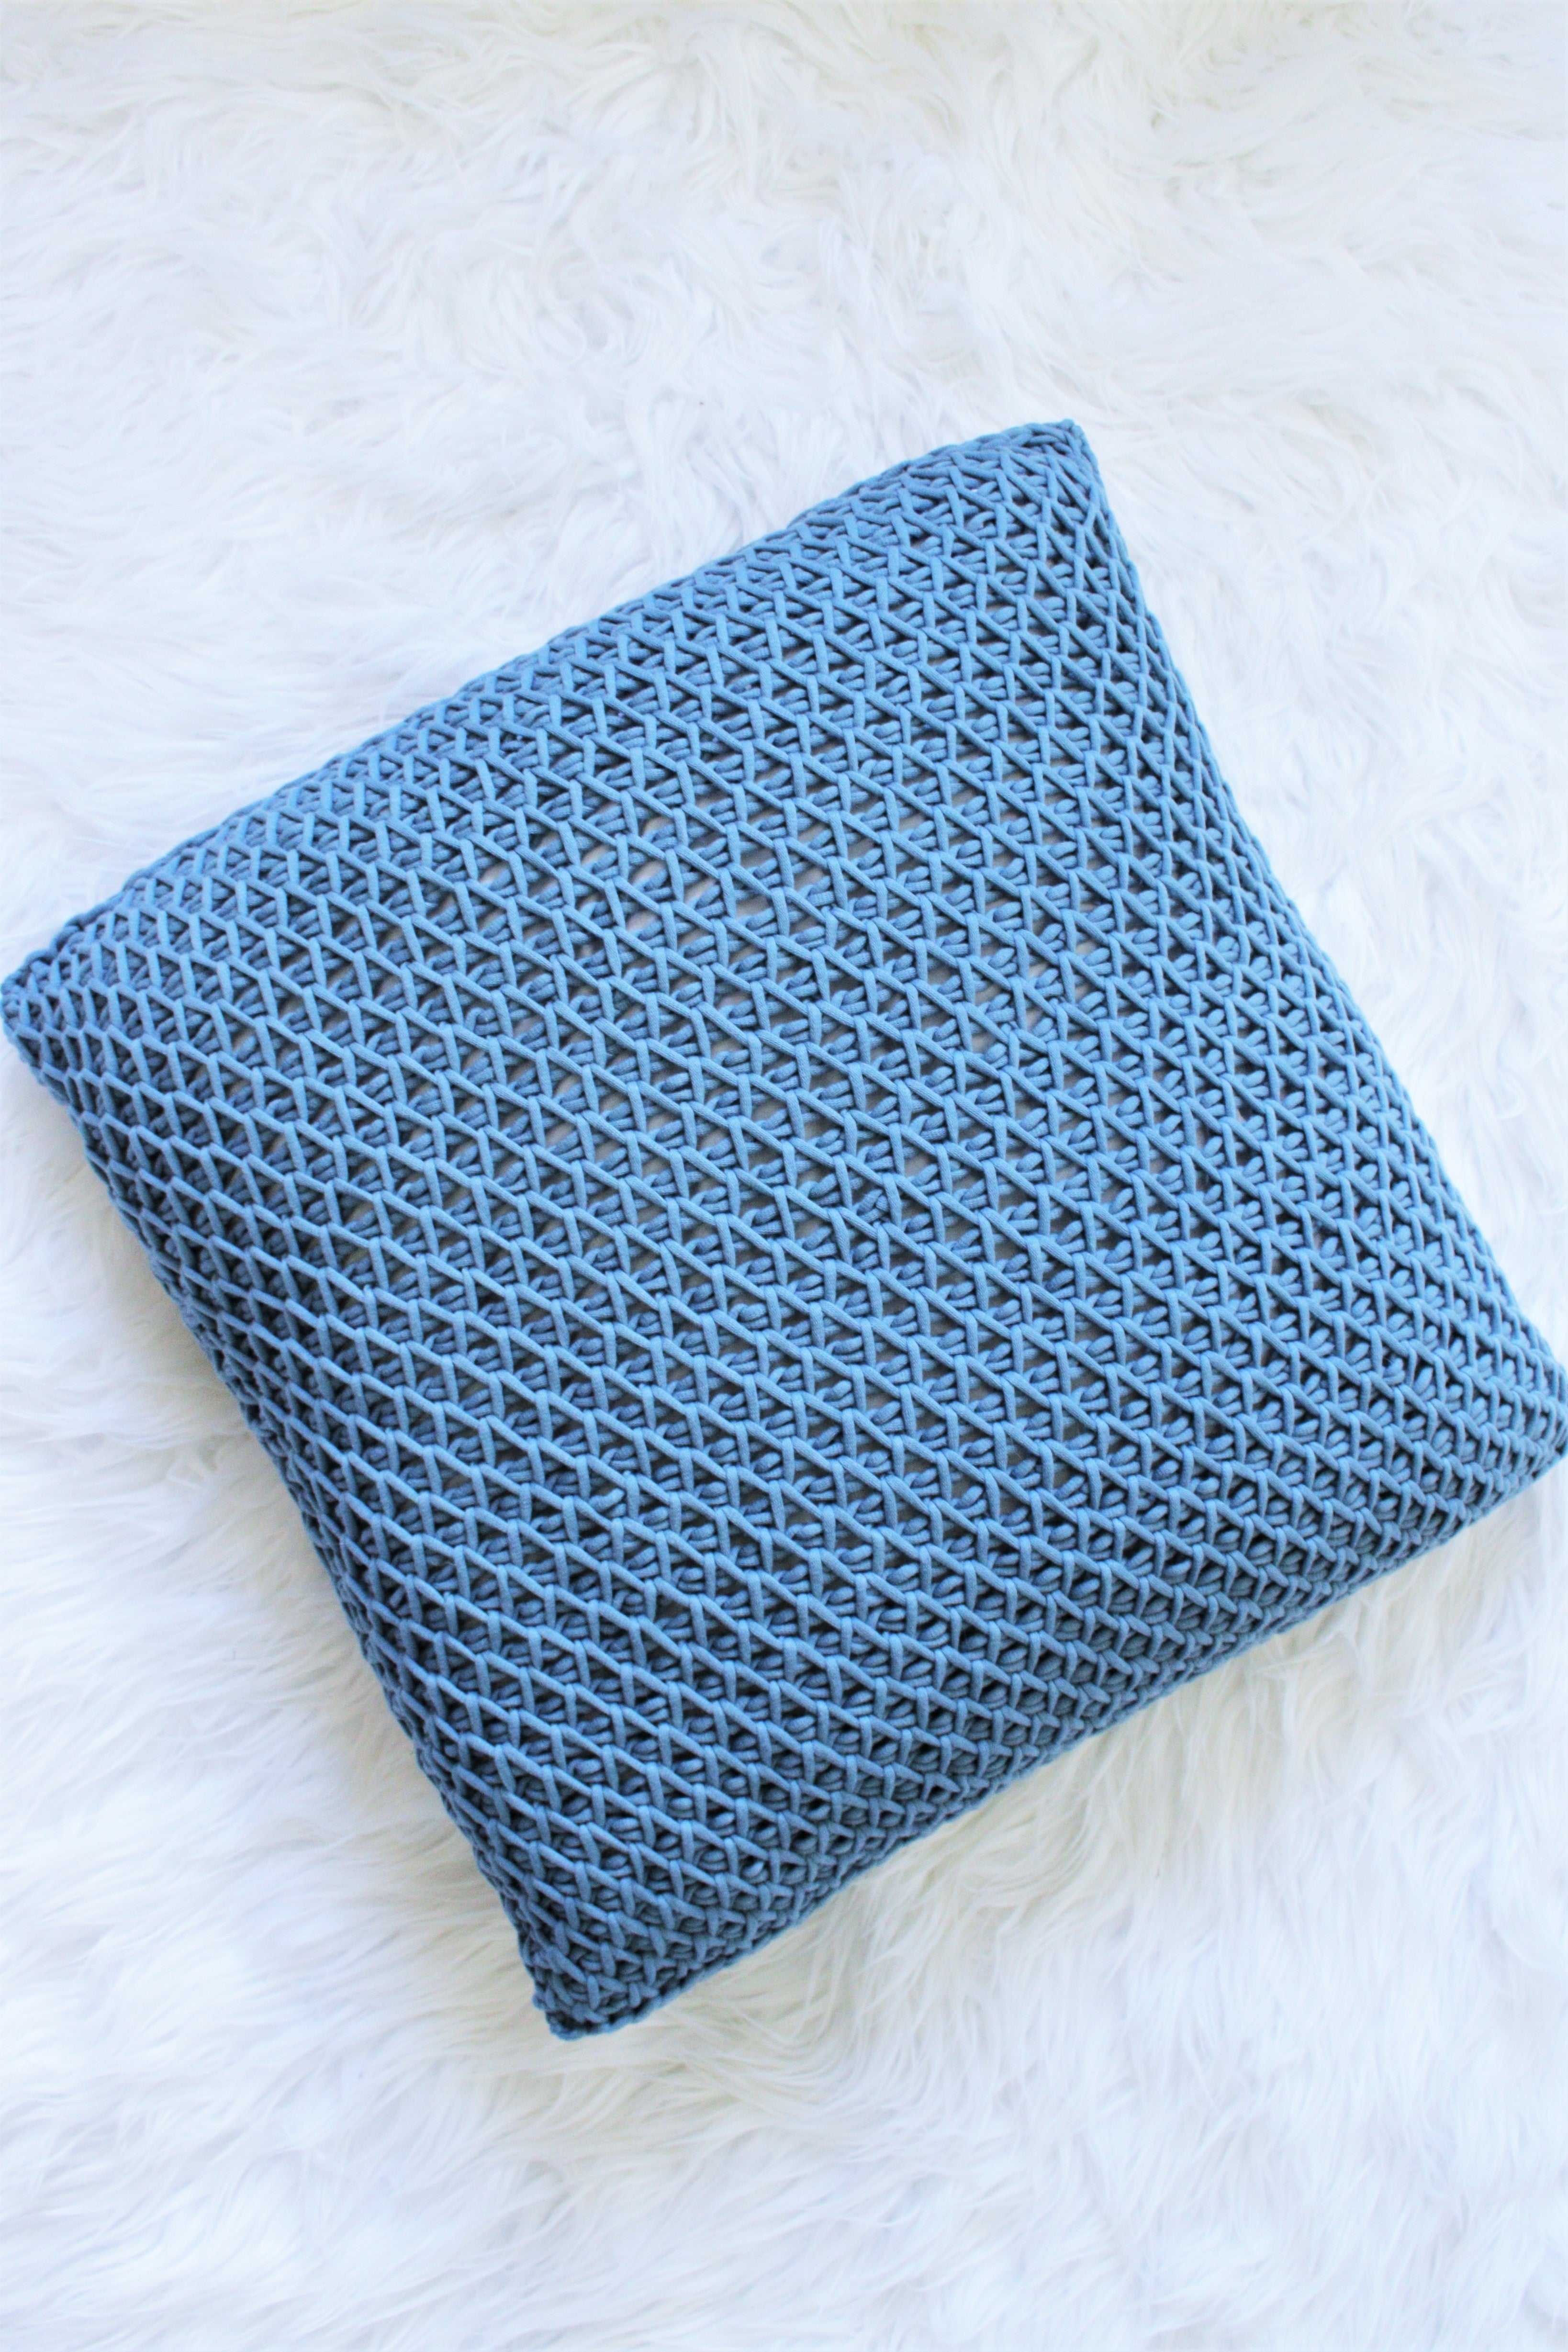 Cottage Throw Pillow // Tunisian Crochet PDF Pattern